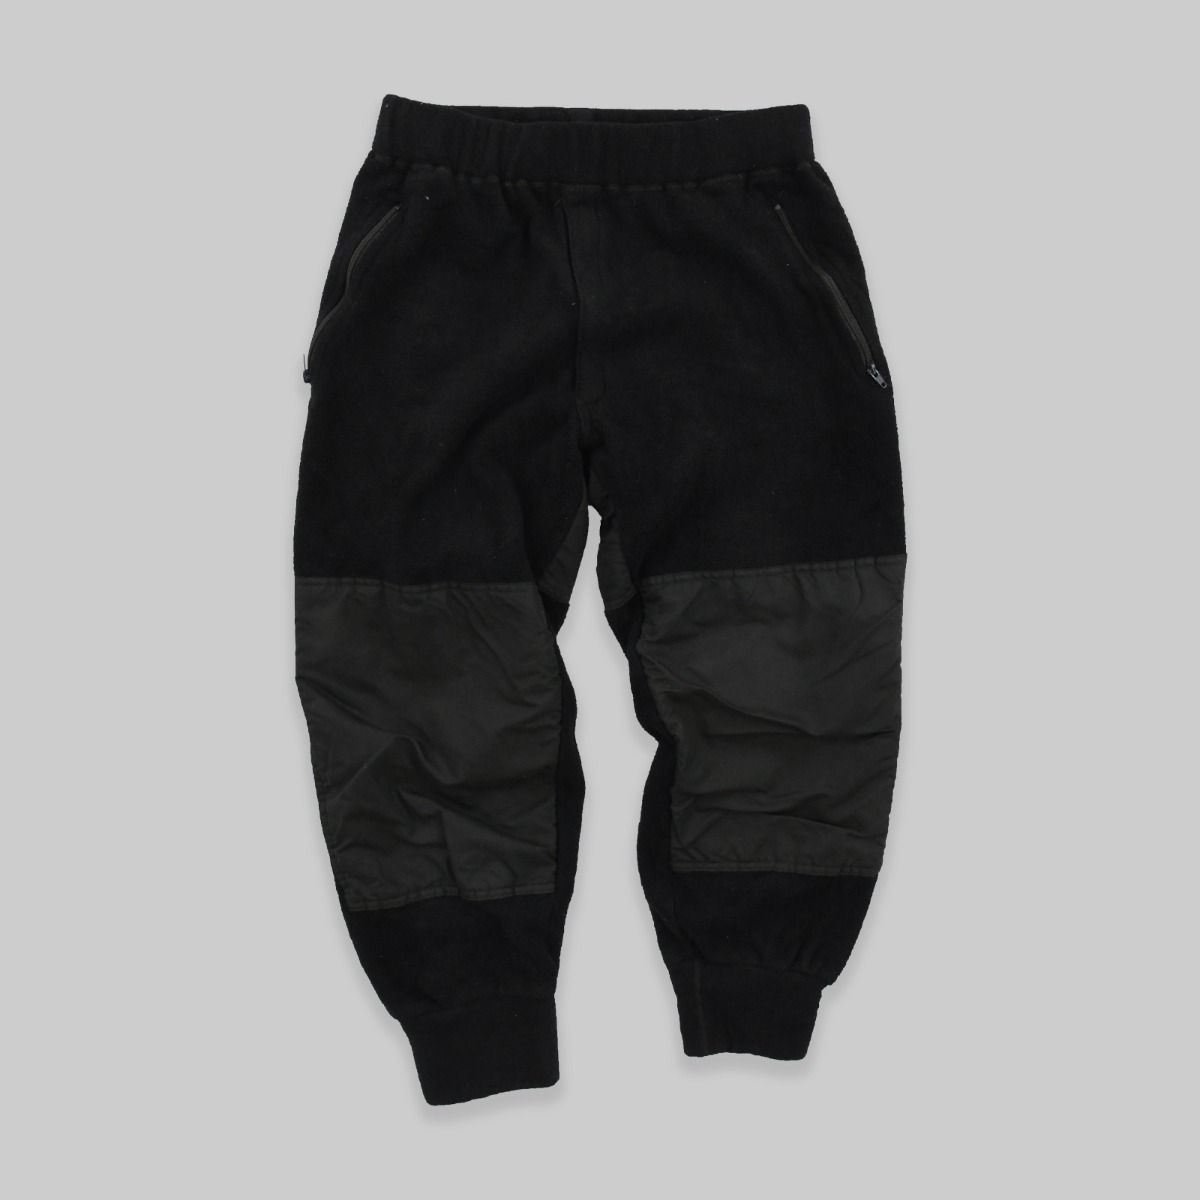 Canadian Military 1980s Fleece Black Pants